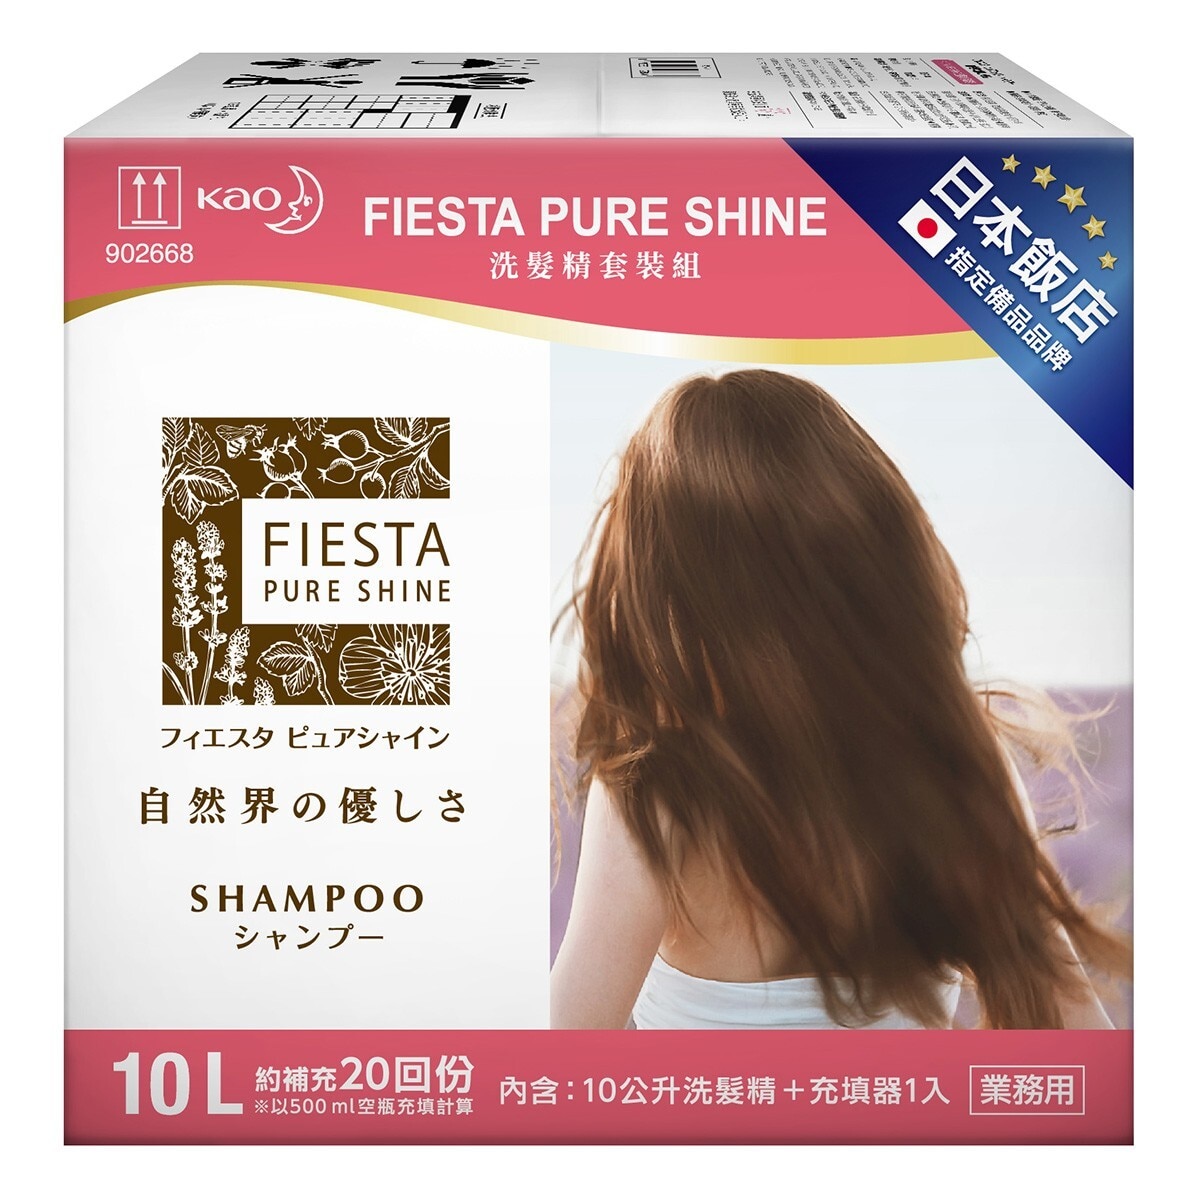 Fiesta Pure Shine 洗髮精套裝組 10公升 X 1入+ 充填器 X 1入